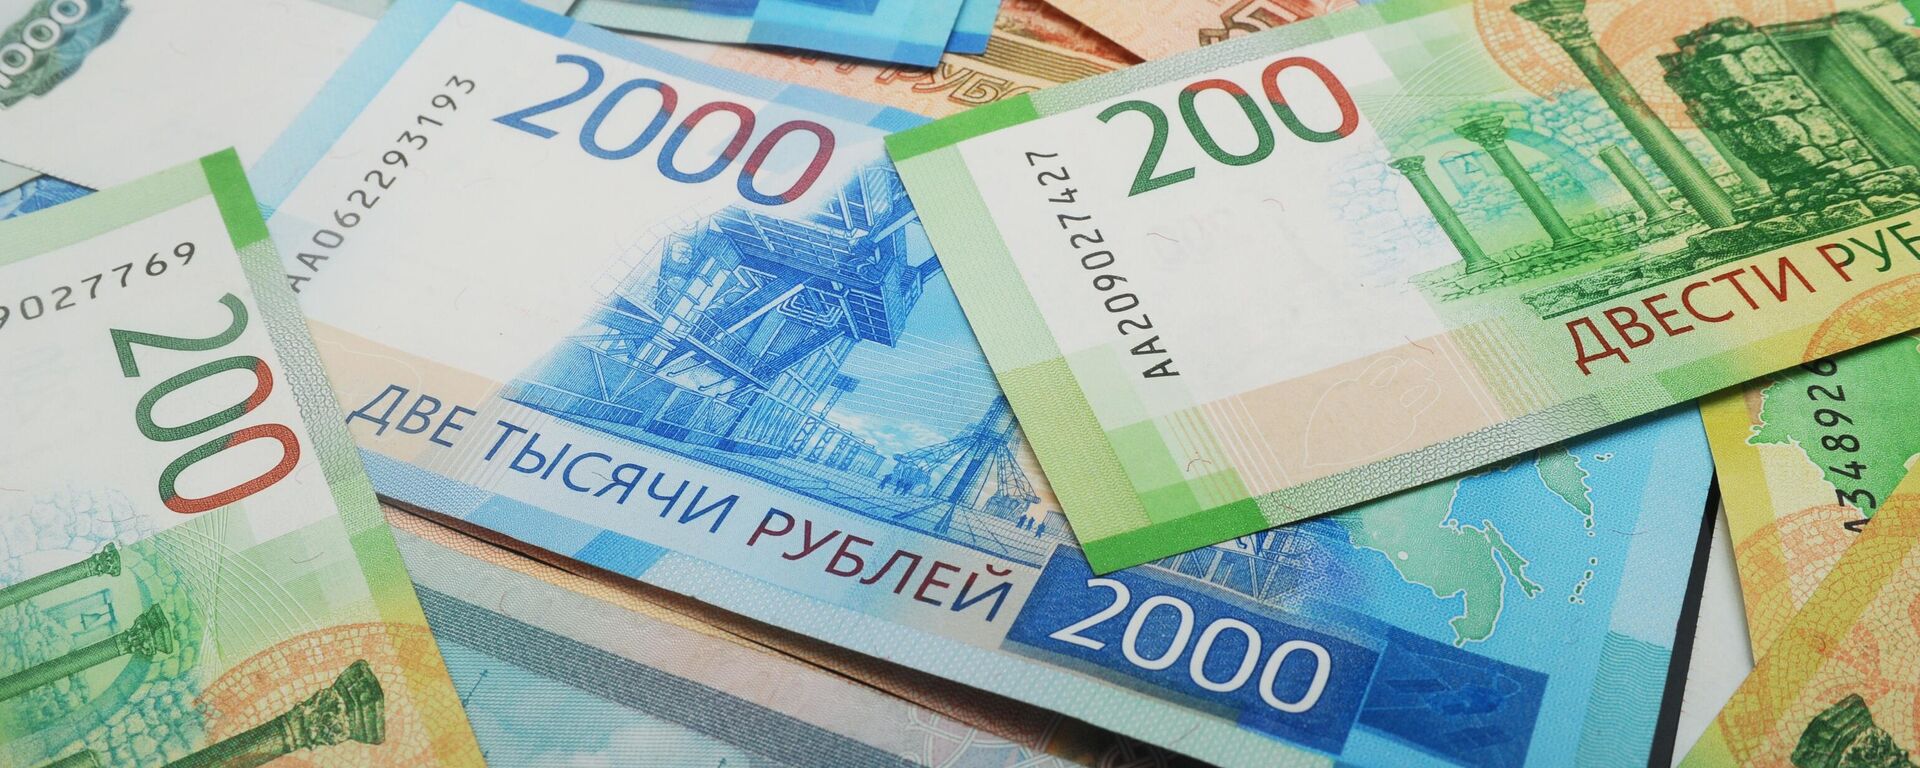 The 200 and 2000 ruble banknotes. - Sputnik International, 1920, 10.08.2023